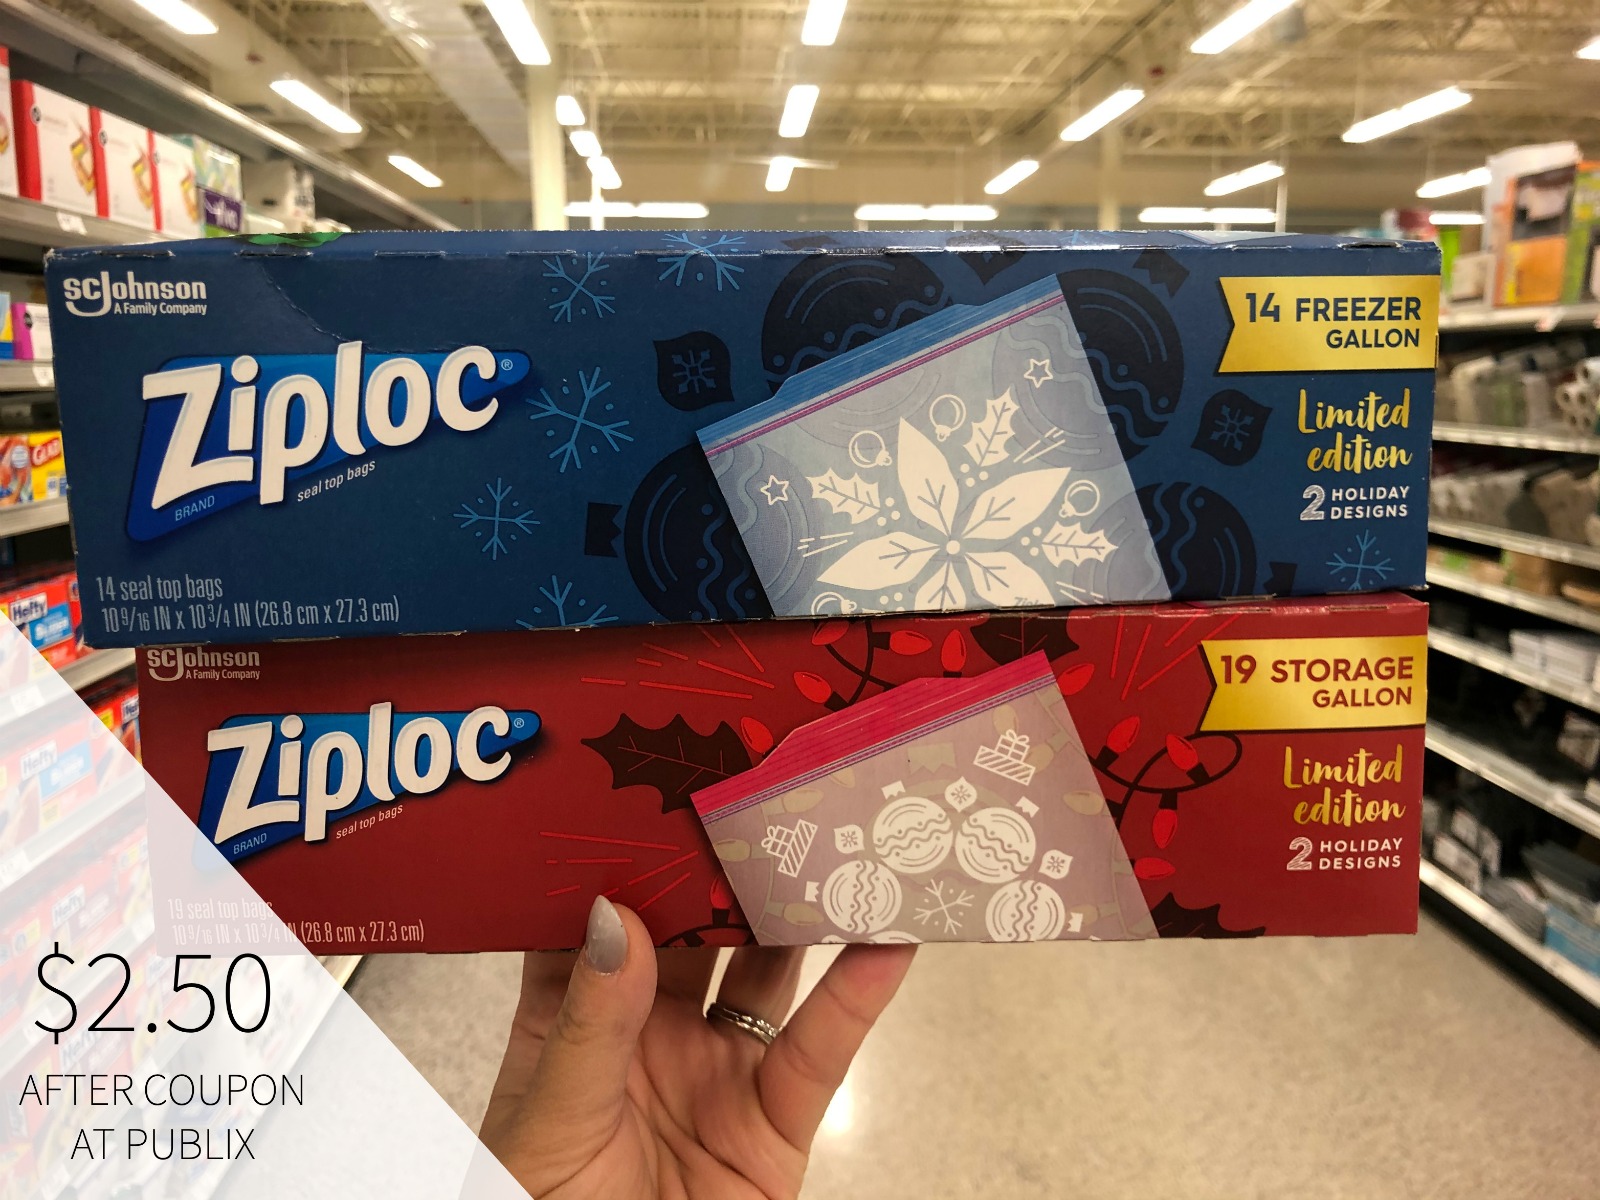 Ziploc Brand Holiday Slider Storage Gallon Bags, 12 Count